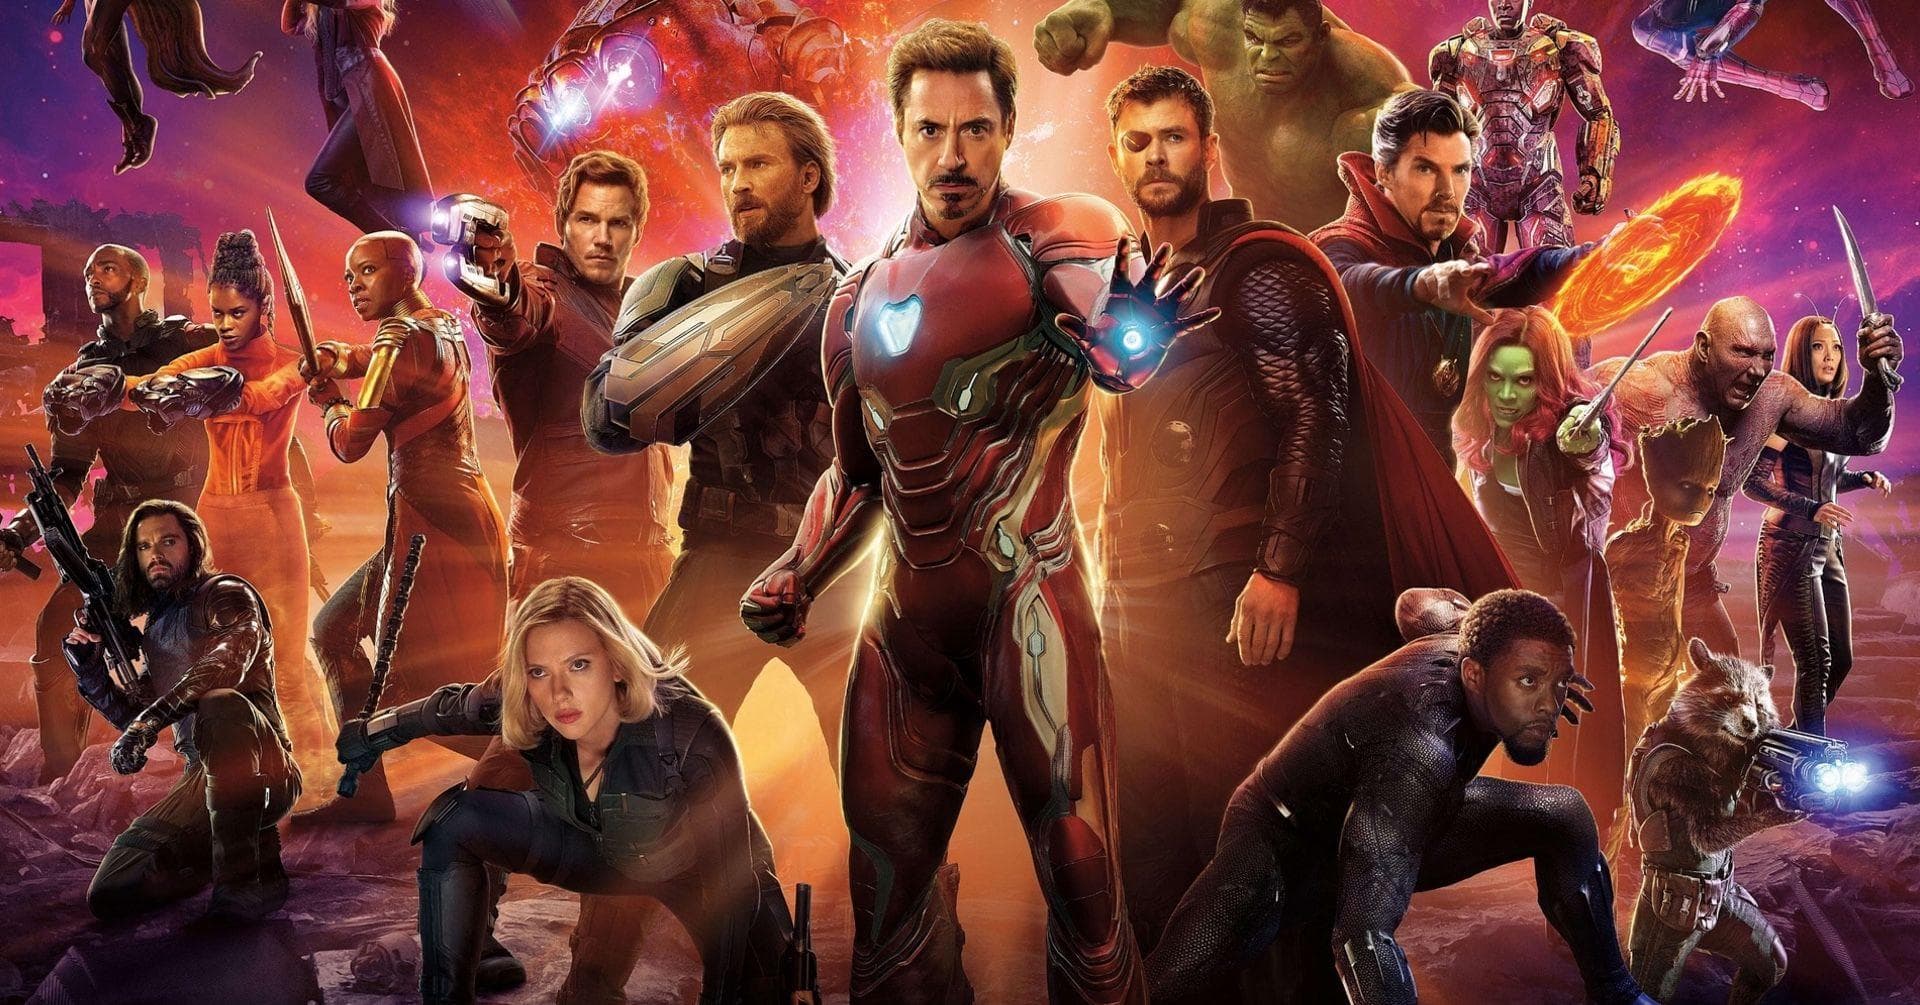 Avengers, Members, Villains, Powers, & More